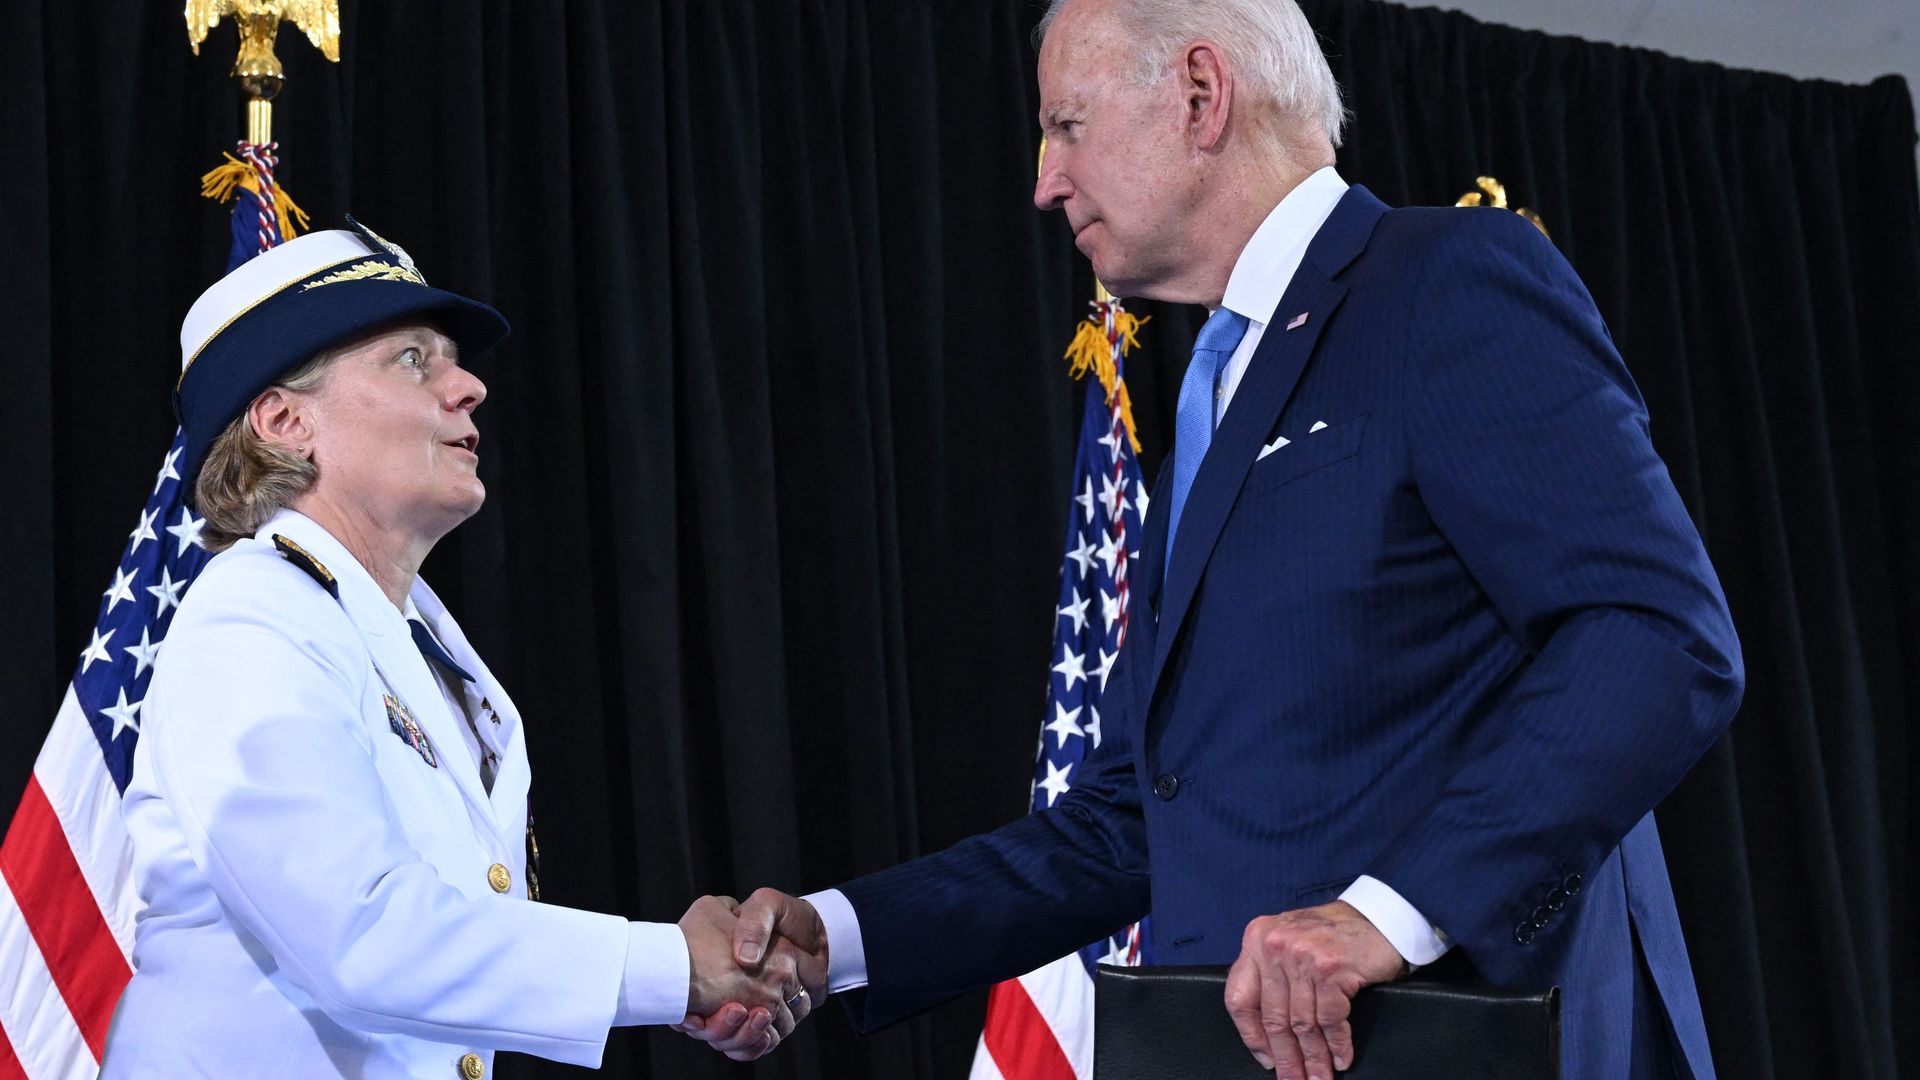 Picture of Linda Fagan and Joe Biden shaking hands